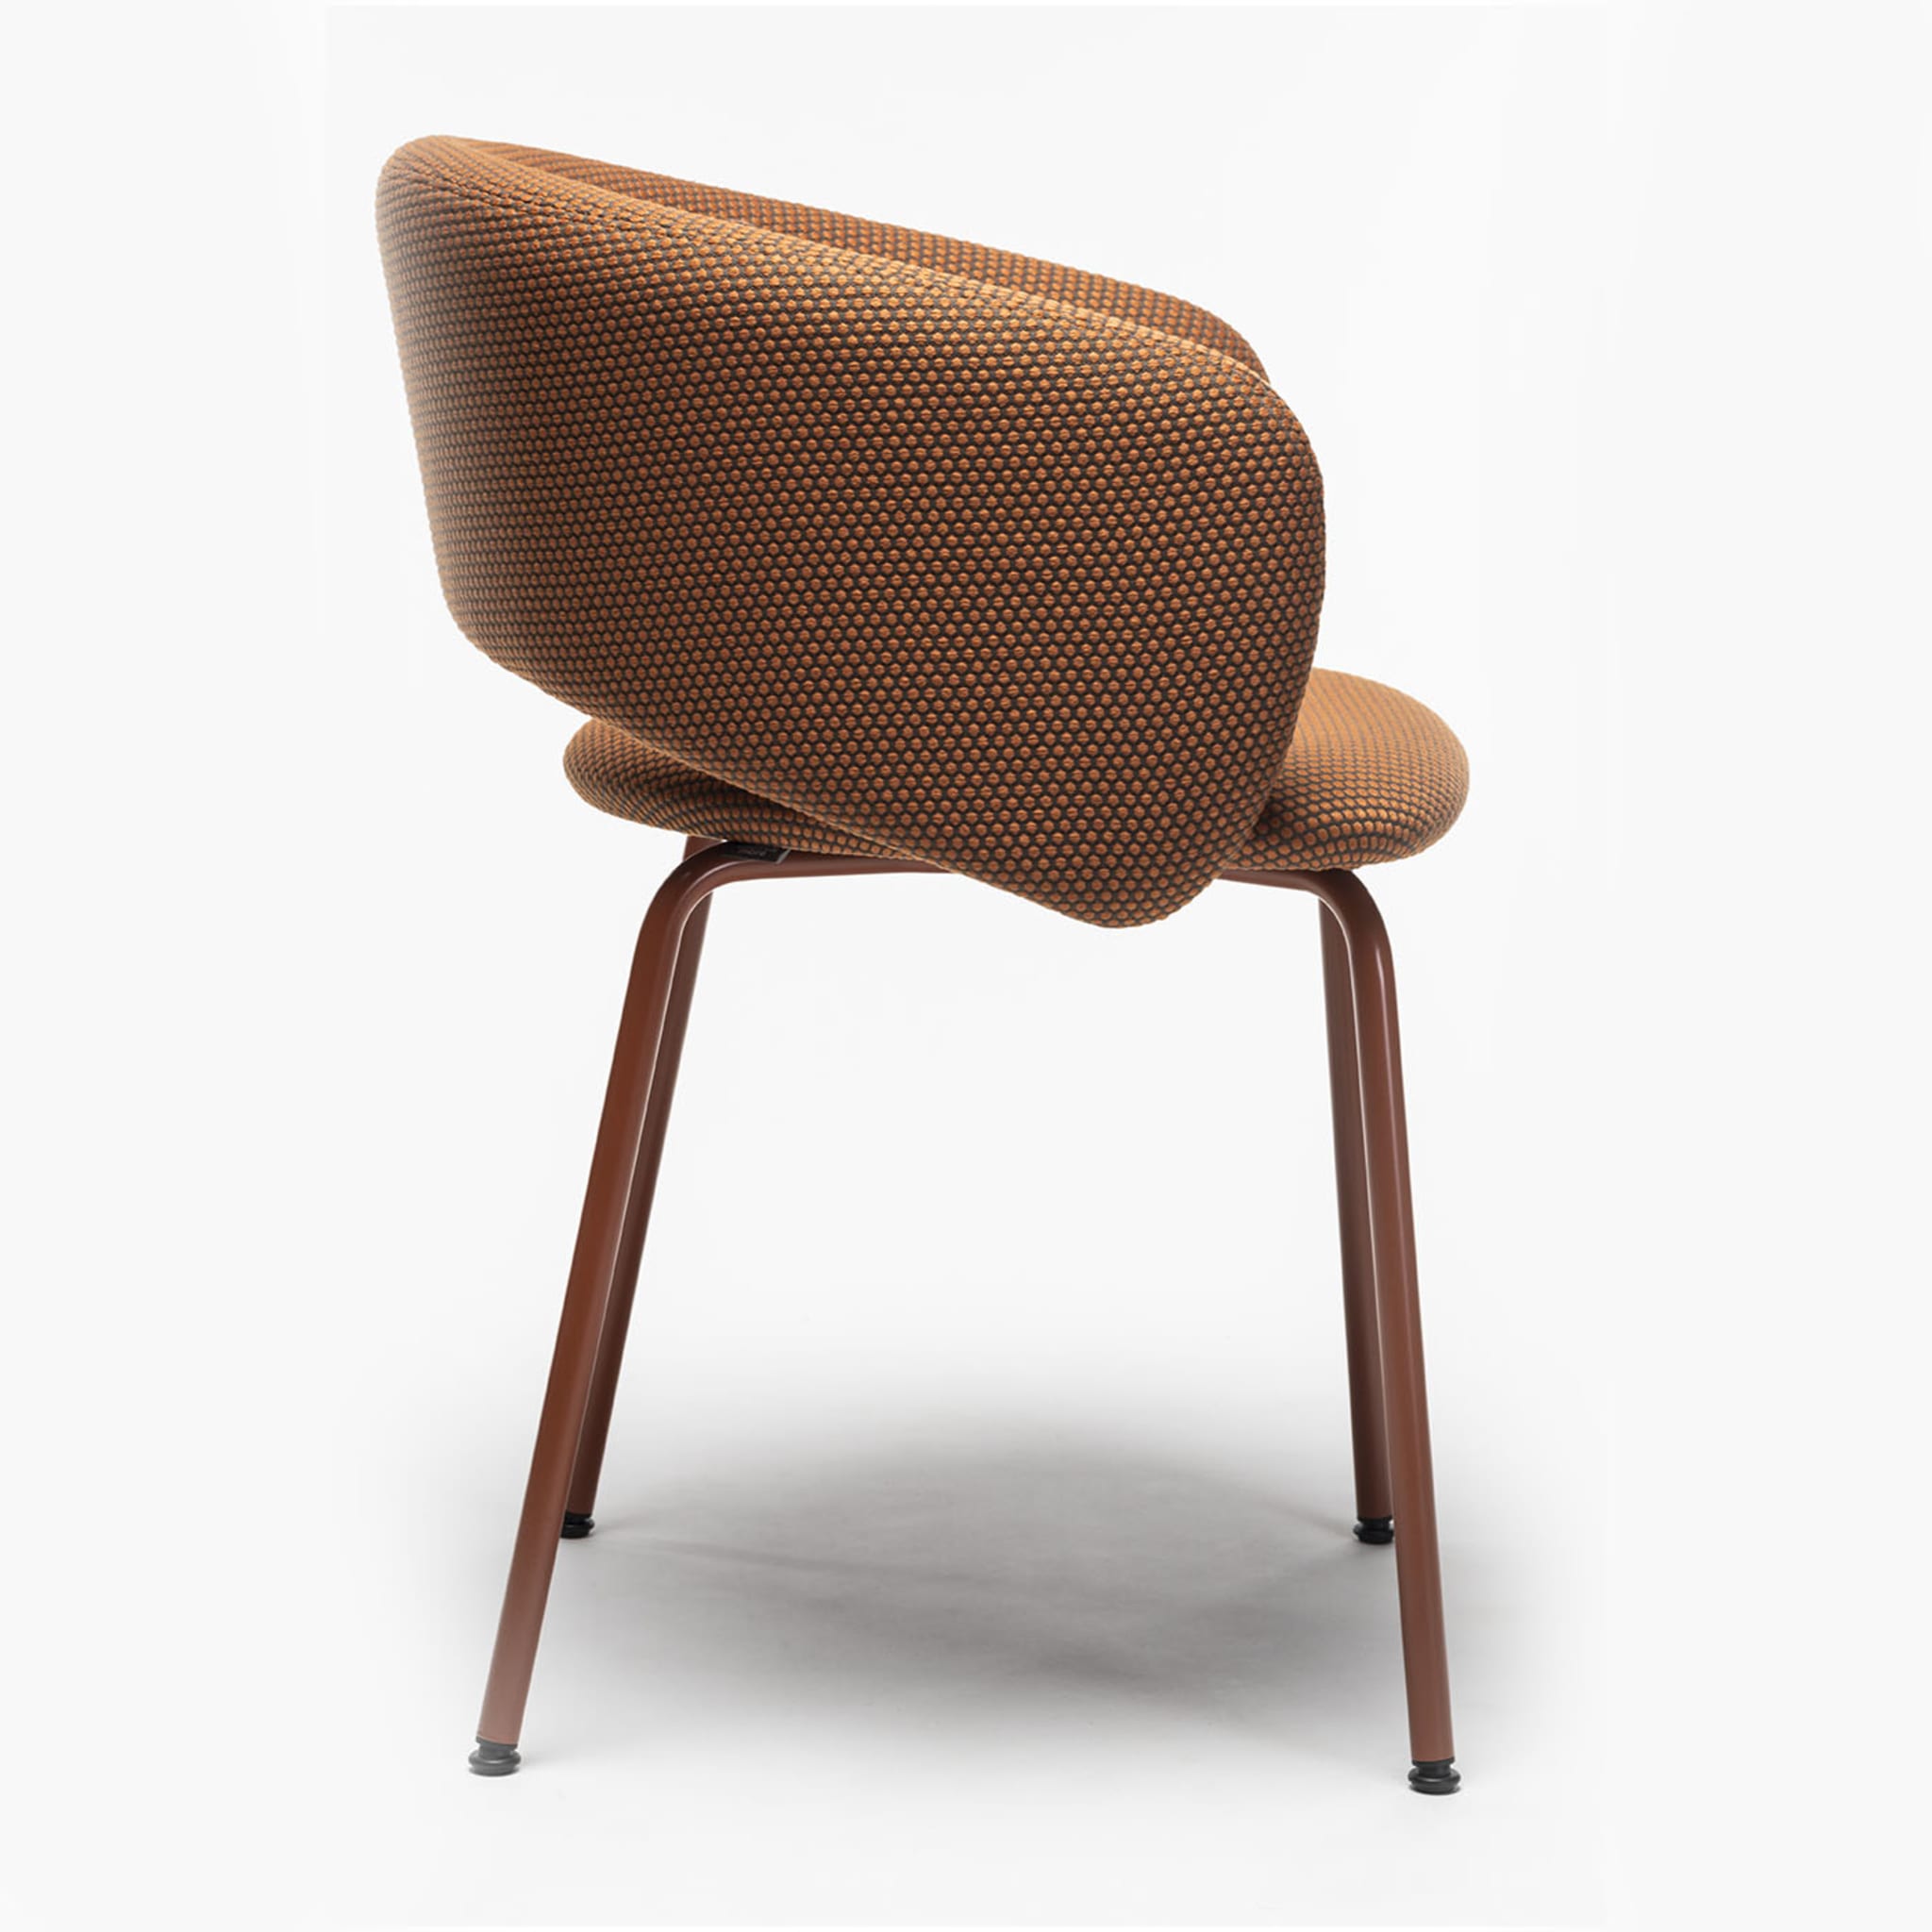 Bel M Terracotta Chair By Pablo Regano - Alternative view 4